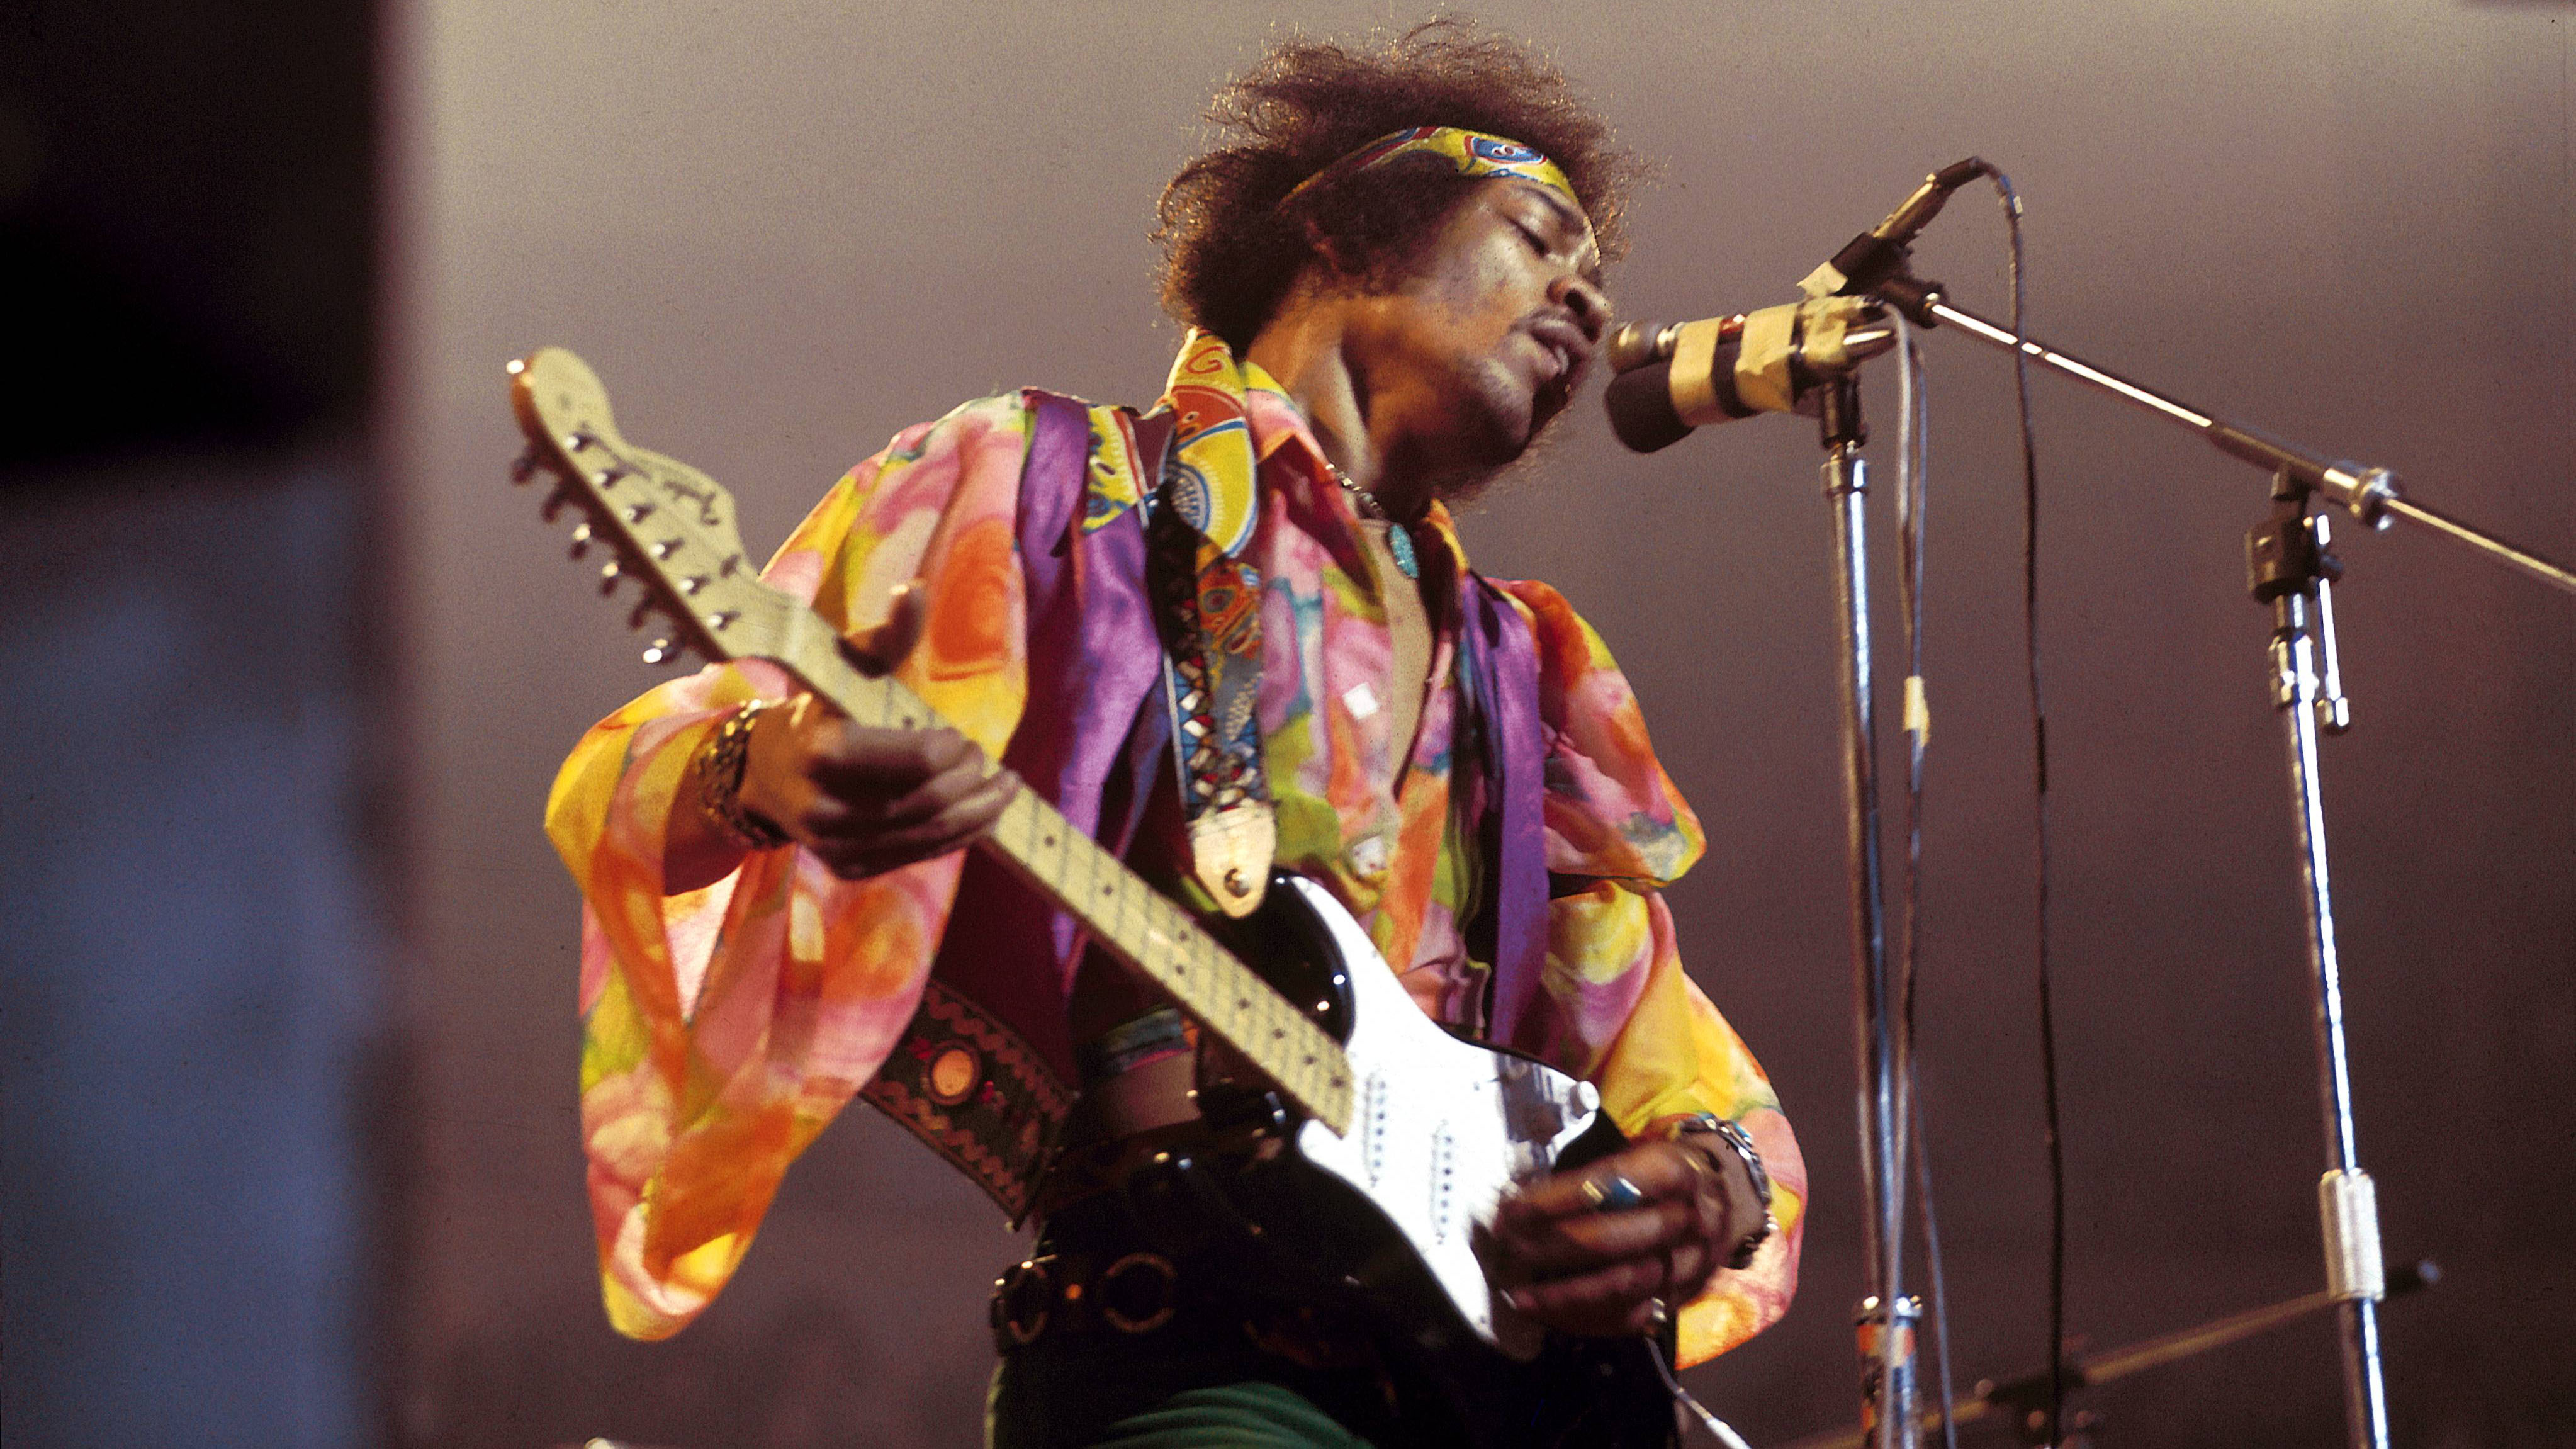 Jimi Hendrix Guitar